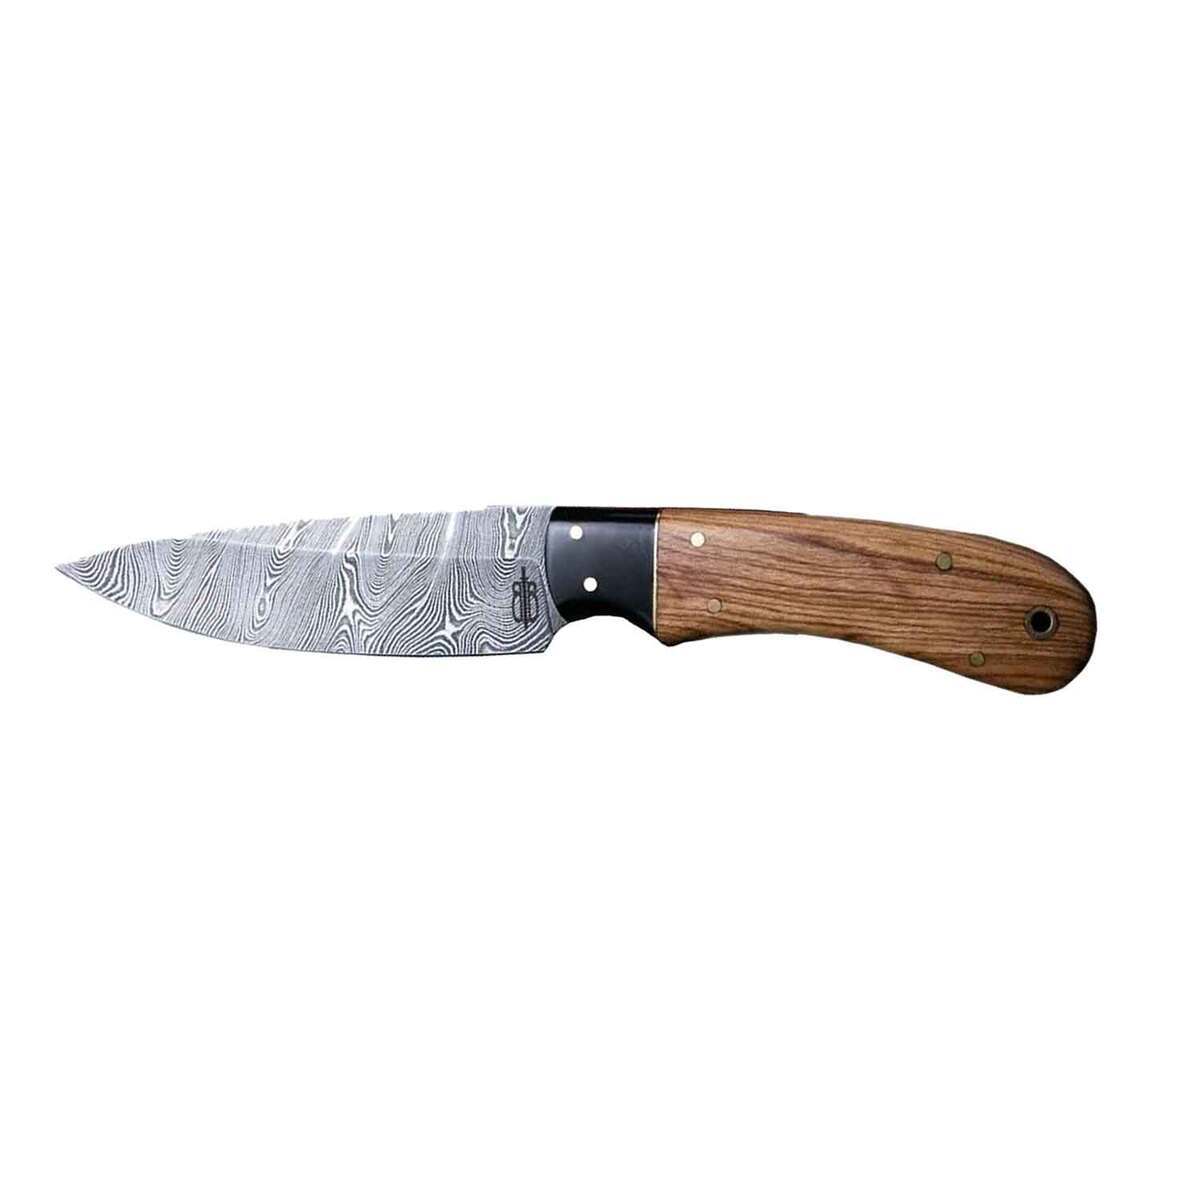 https://www.knives.com/medias/bnb-knives-utility-hunter-4-inch-fixed-blade-brown-1721176-1.jpg?context=bWFzdGVyfGltYWdlc3wzNzM0MnxpbWFnZS9qcGVnfGhkNy9oNjMvMTA3NjM1NjE5NTk0NTQvMTcyMTE3Ni0xX2Jhc2UtY29udmVyc2lvbkZvcm1hdF8xMjAwLWNvbnZlcnNpb25Gb3JtYXR8NGQyMWZjMTc1NmIwZDA5ZmEyNWViMmYxNDIxYWQyMTc0OWQ4MGZmYjdkMWFiMDA5ZmZjMWY5MWFmNDk1YjZjYQ